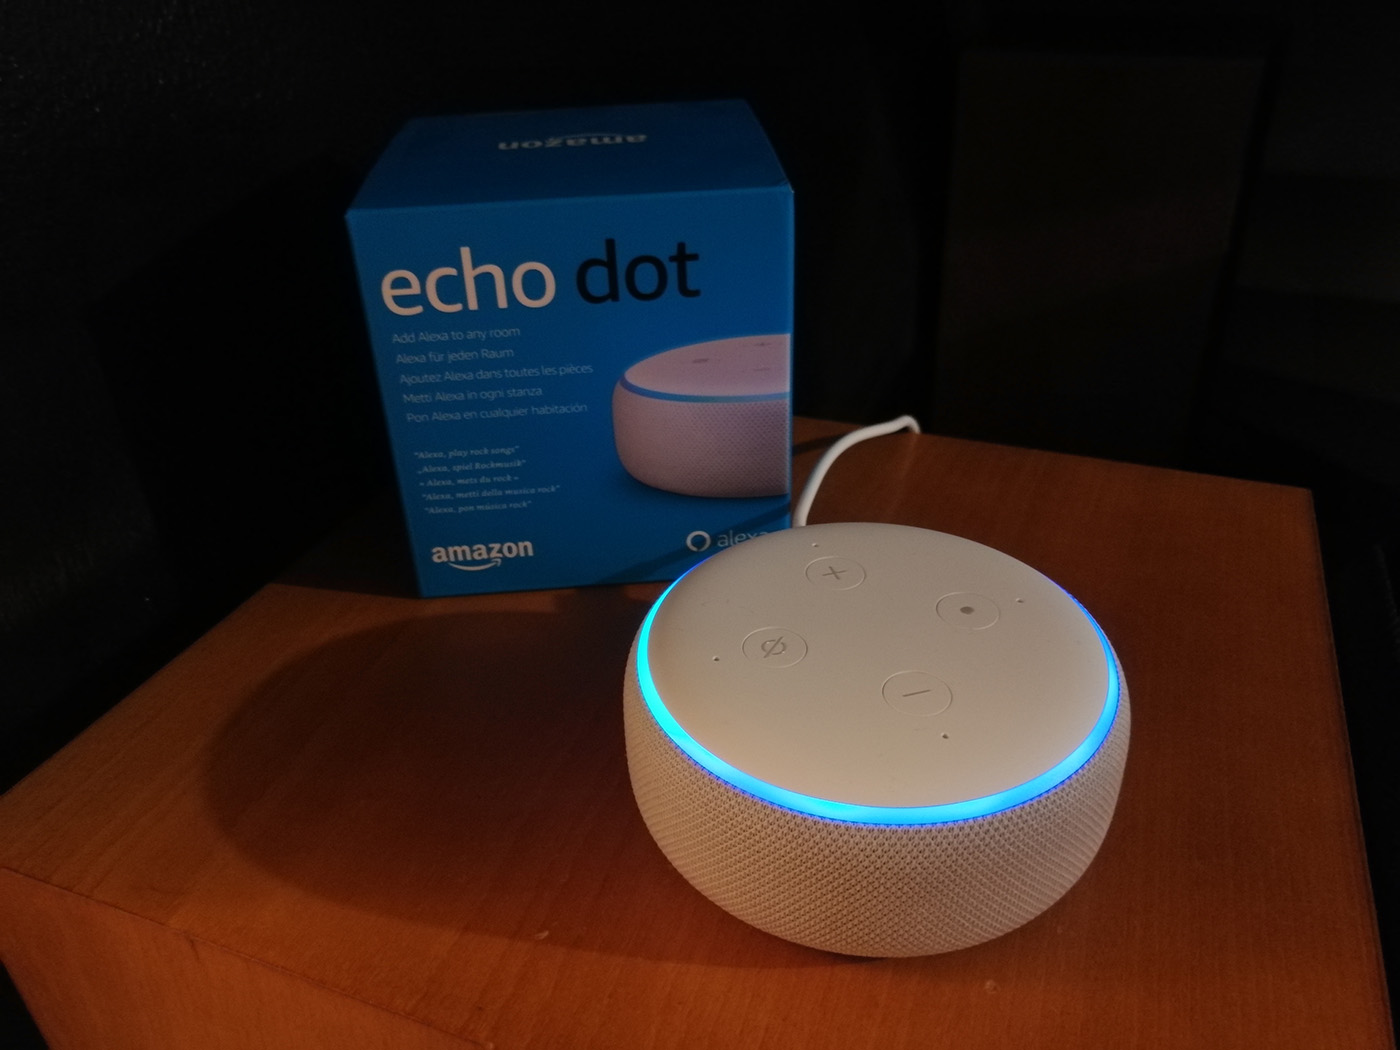 Echo Alexa